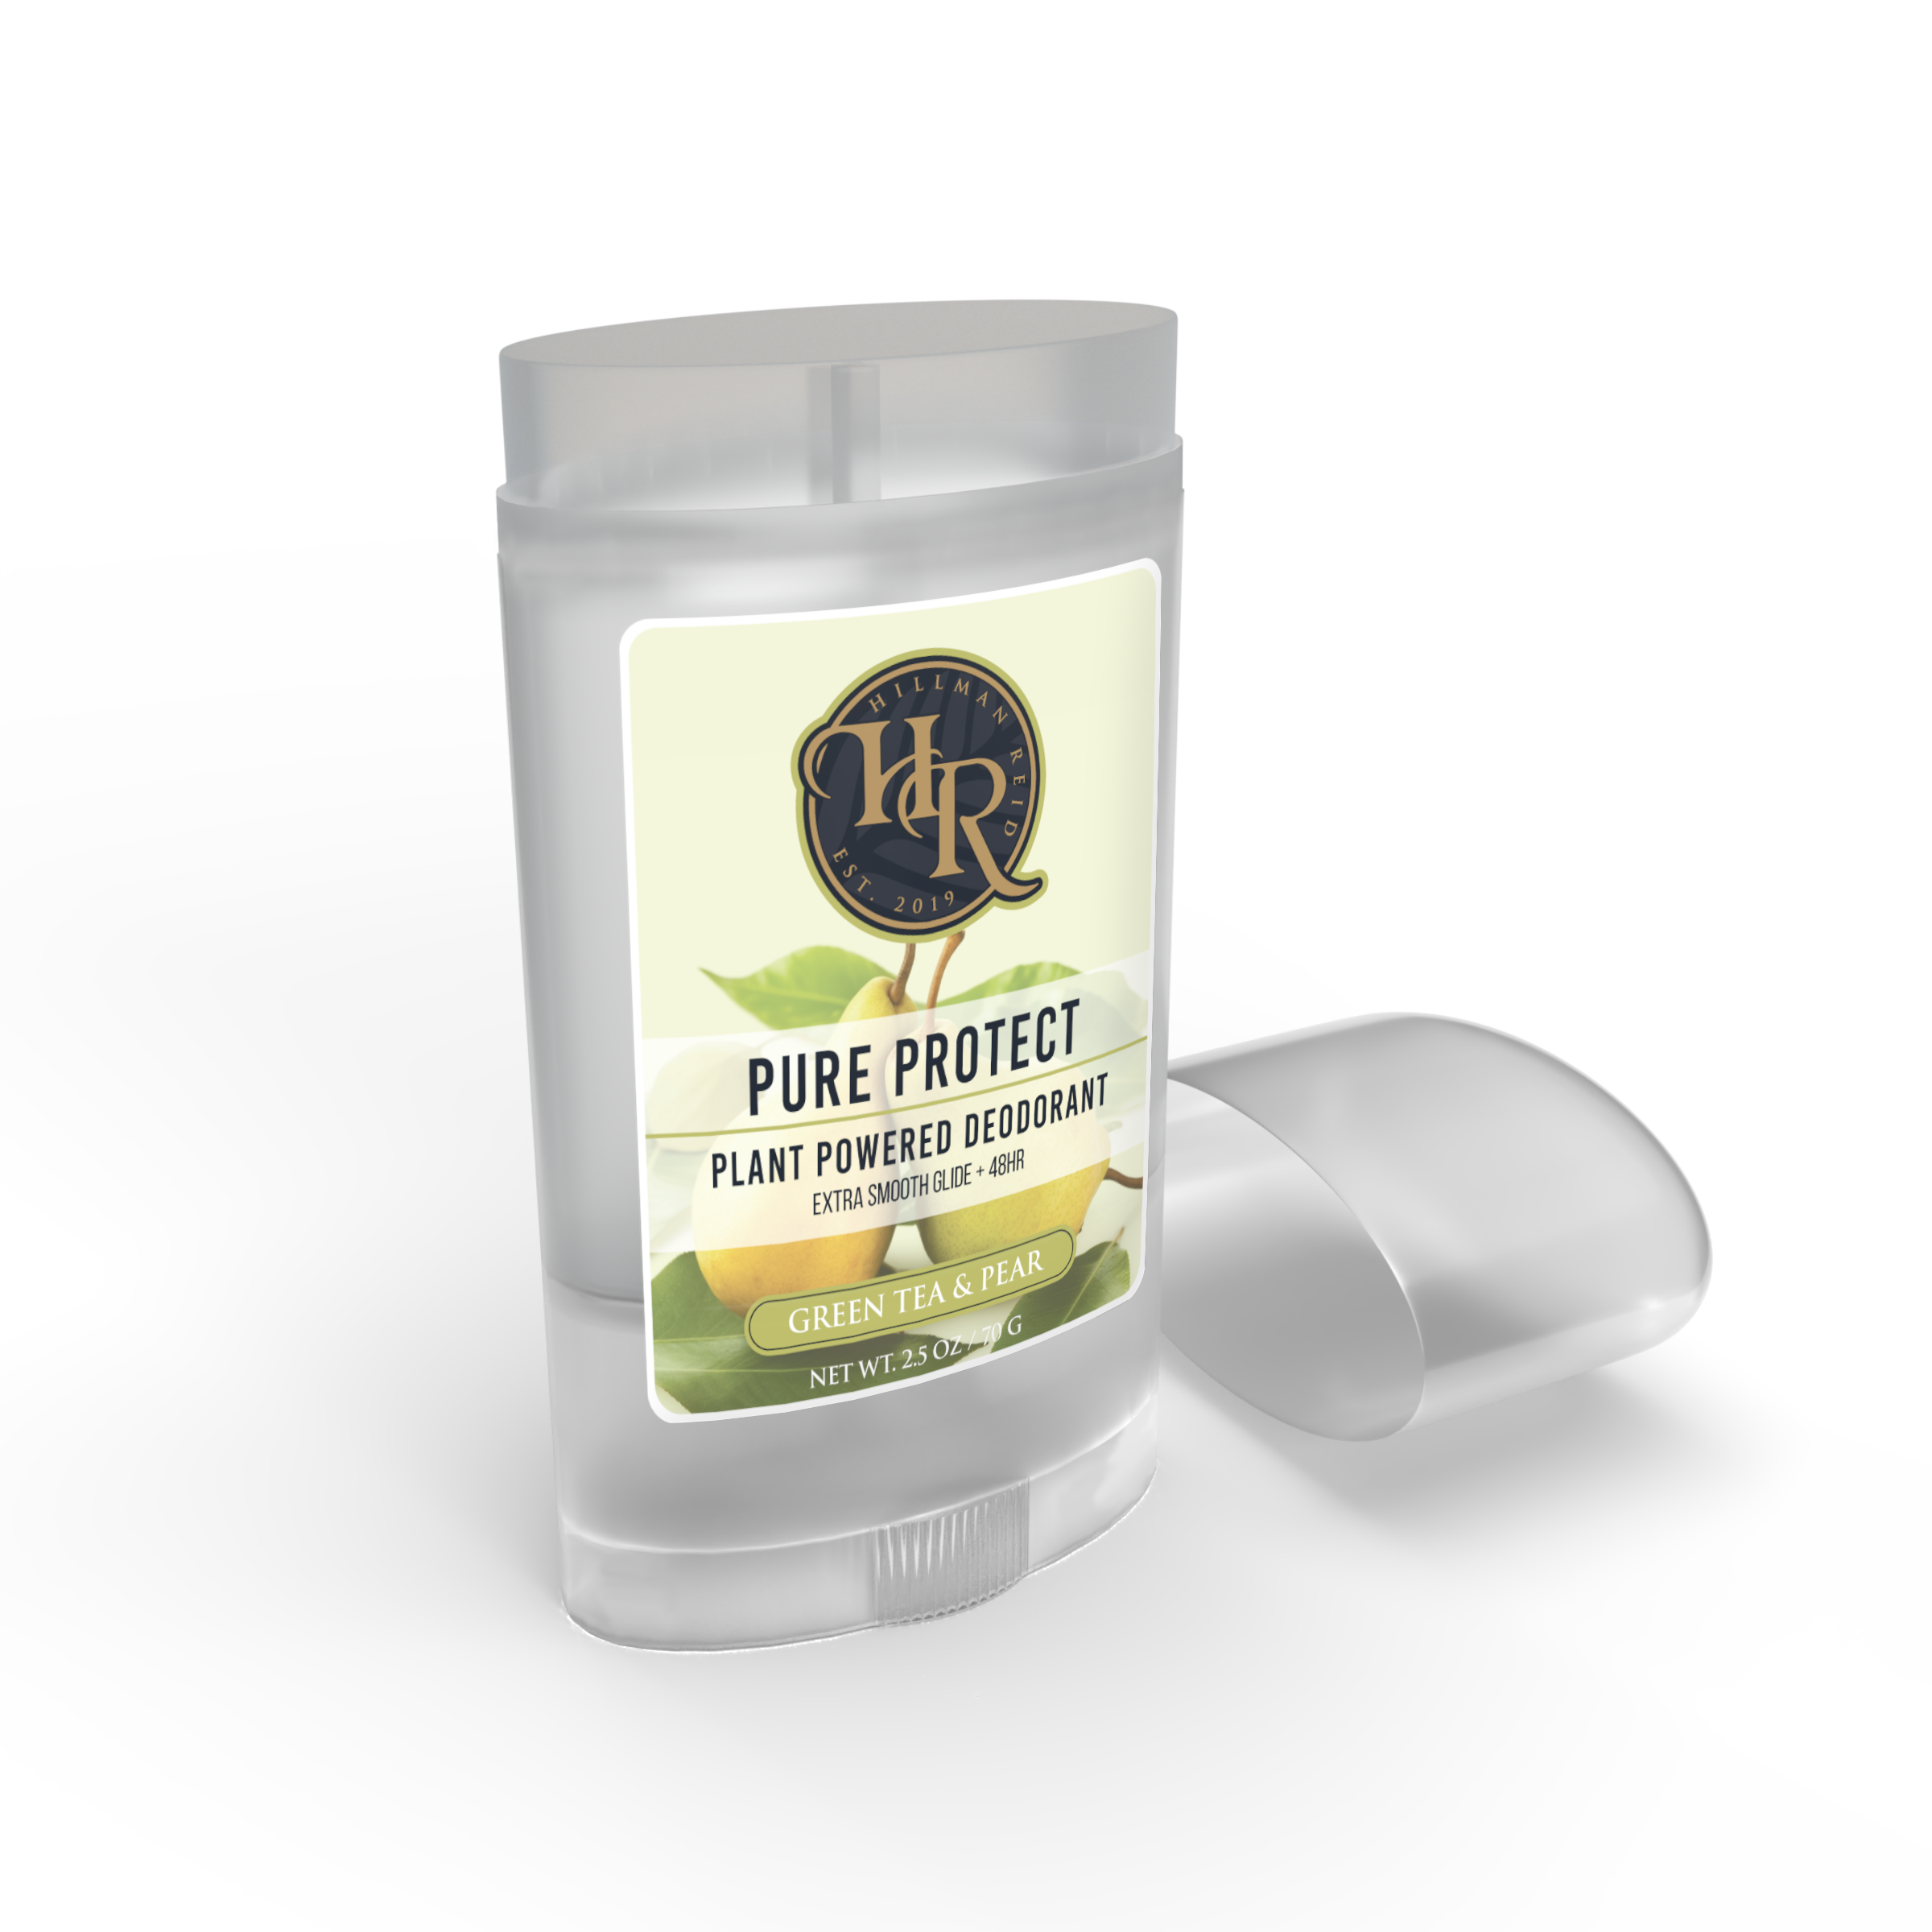 Green Tea & Pear Pure Protect Deodorant Stick Skin Care Skin Care